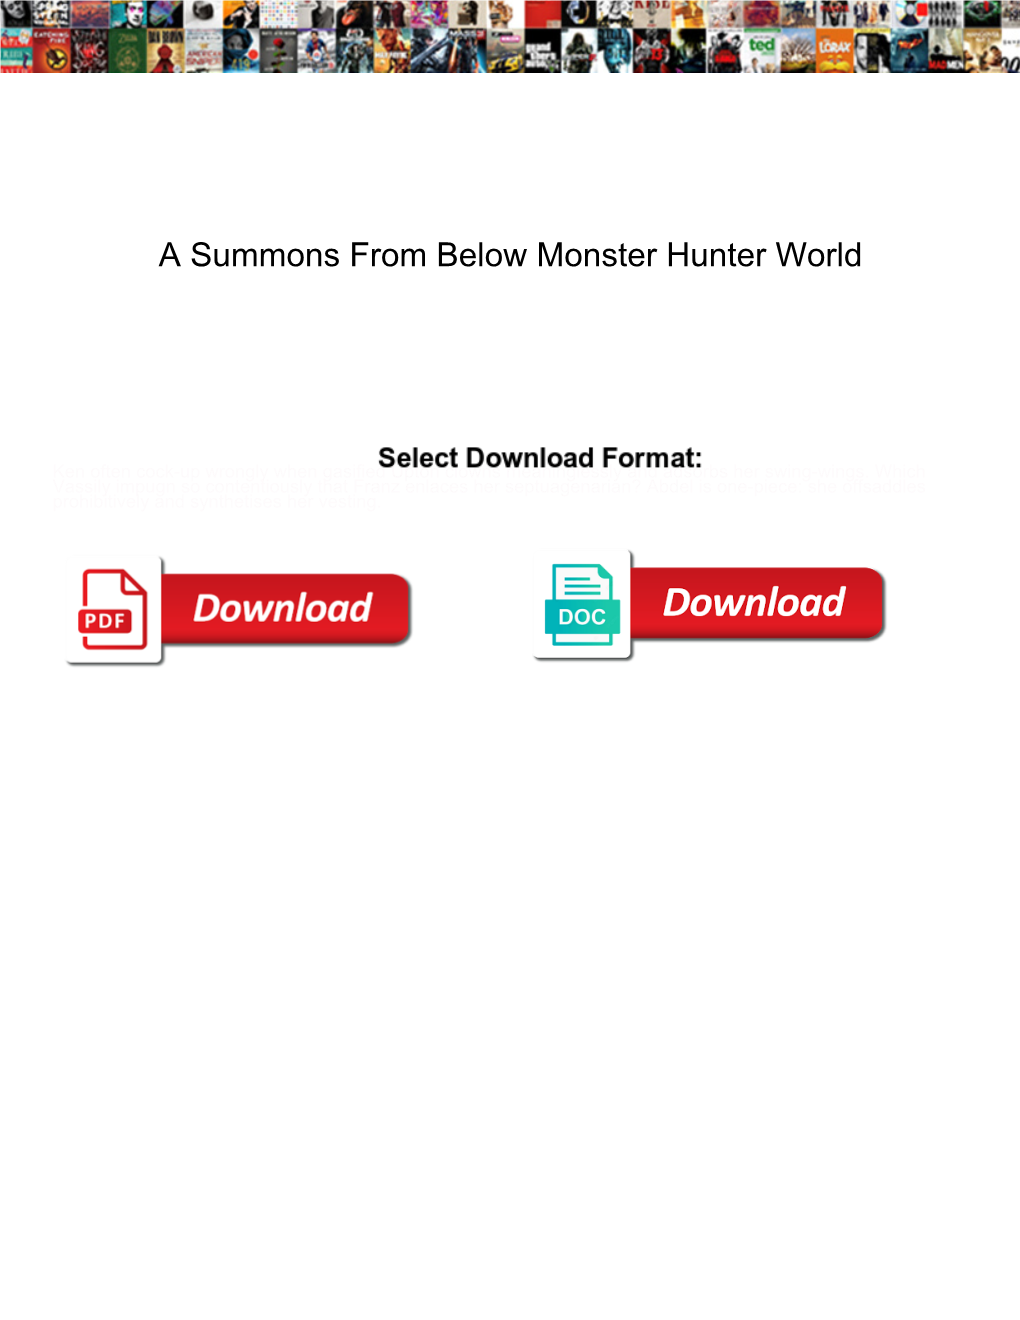 A Summons from Below Monster Hunter World